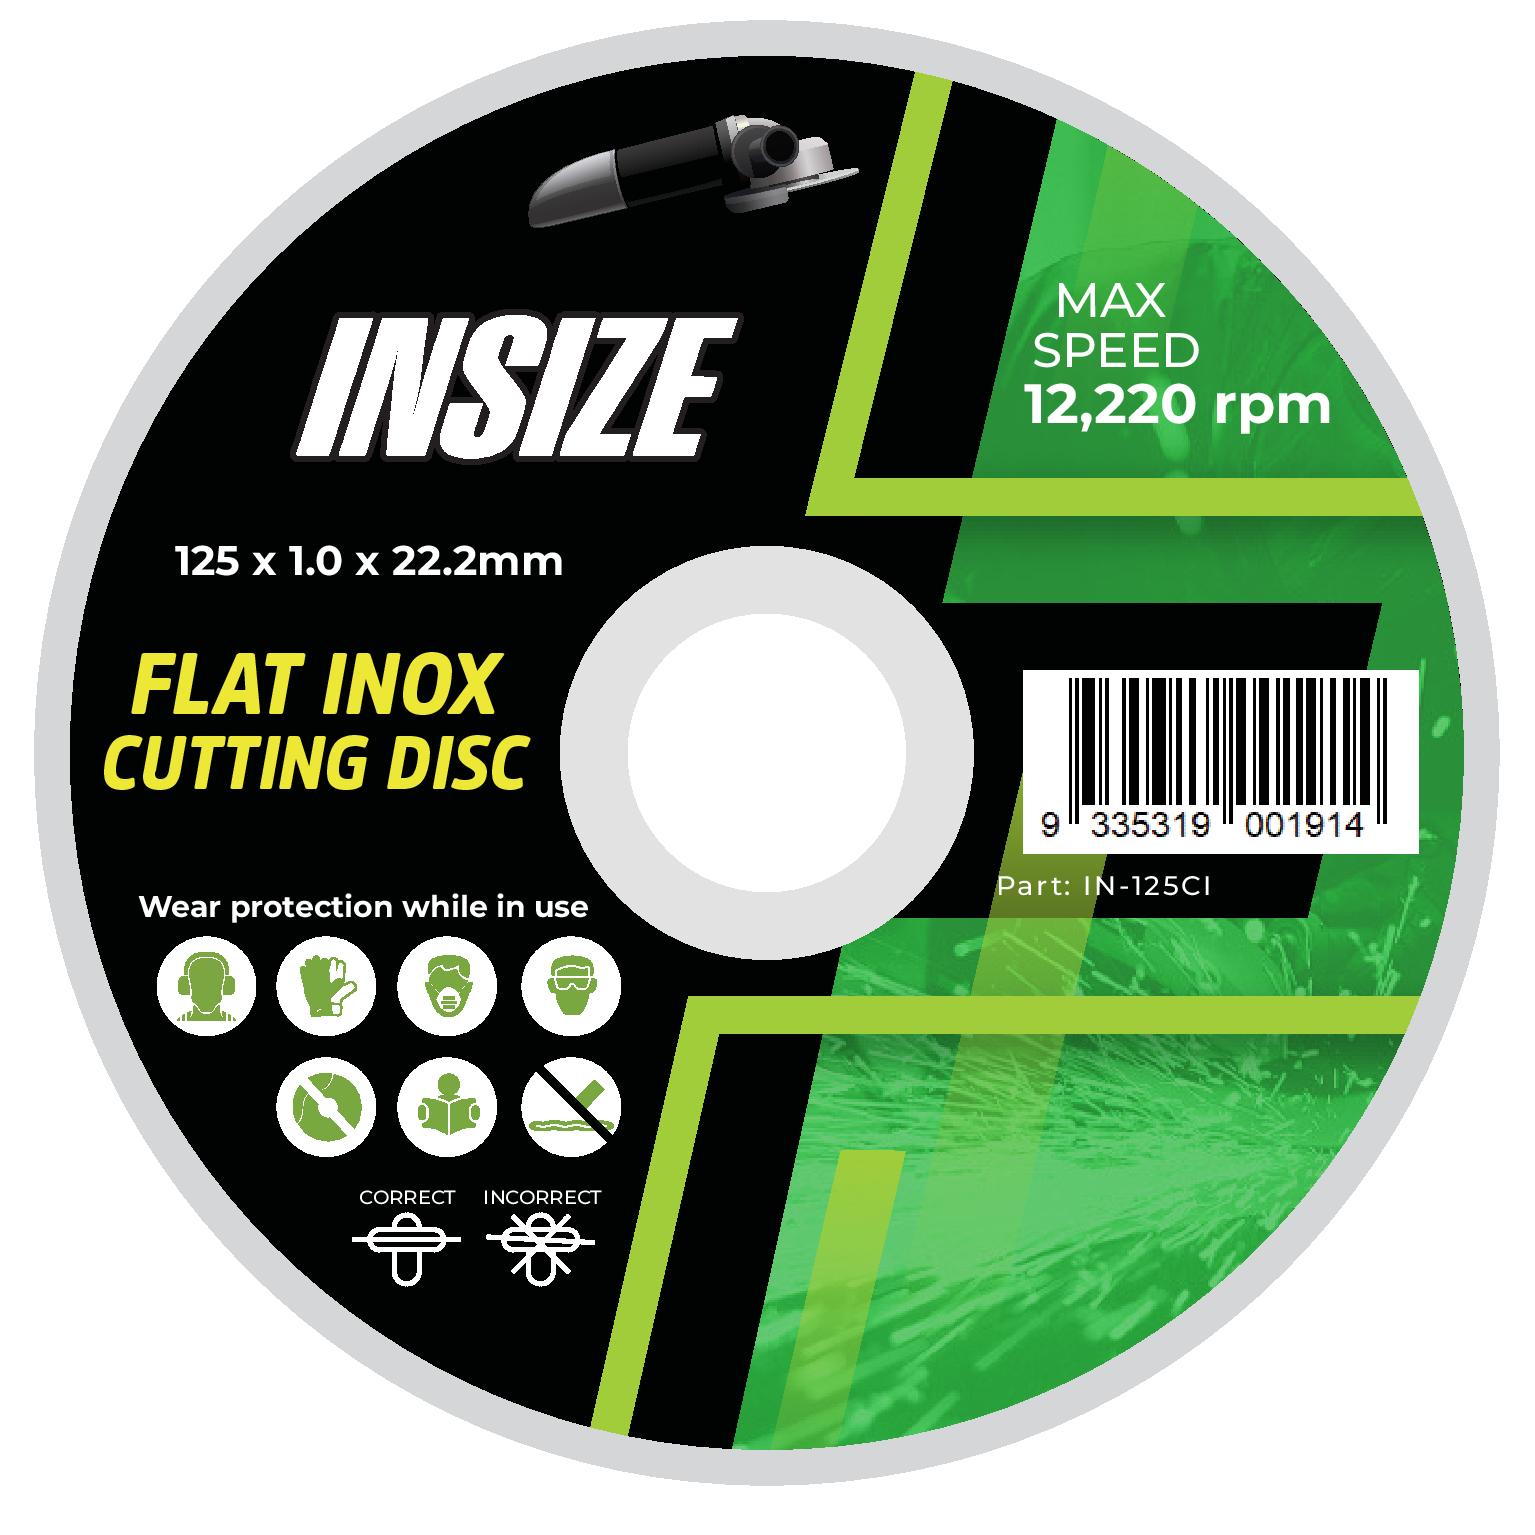 IN-125CI 125 x 1.0 x 22.2mm Flat Inox Cutting Disc